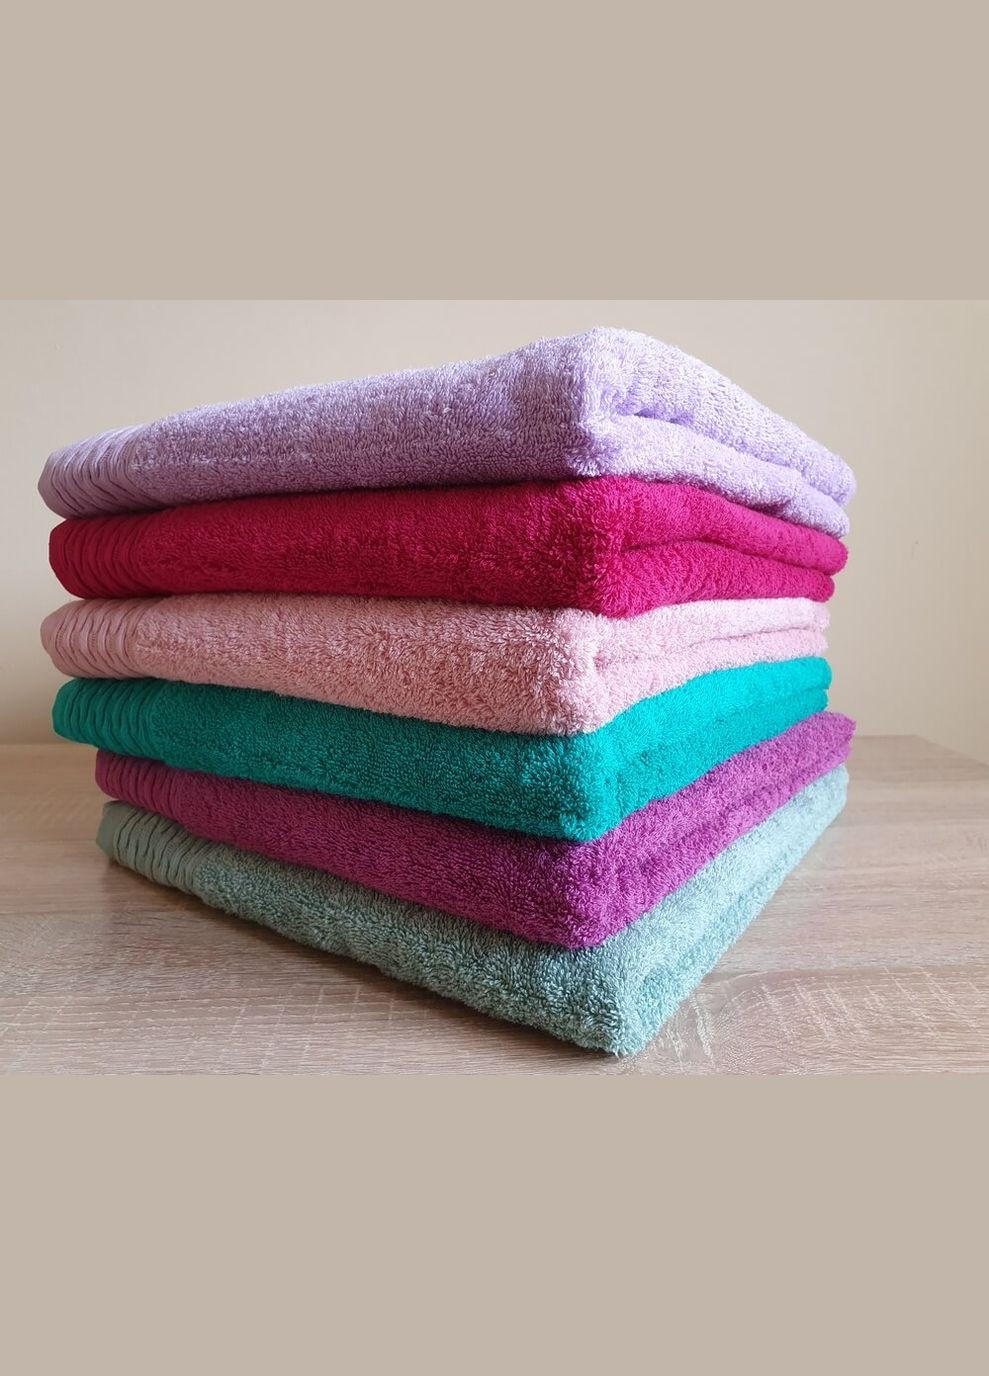 GM Textile полотенце махровое 40х70см polosa 500г/м2 (оливковый) комбинированный производство -